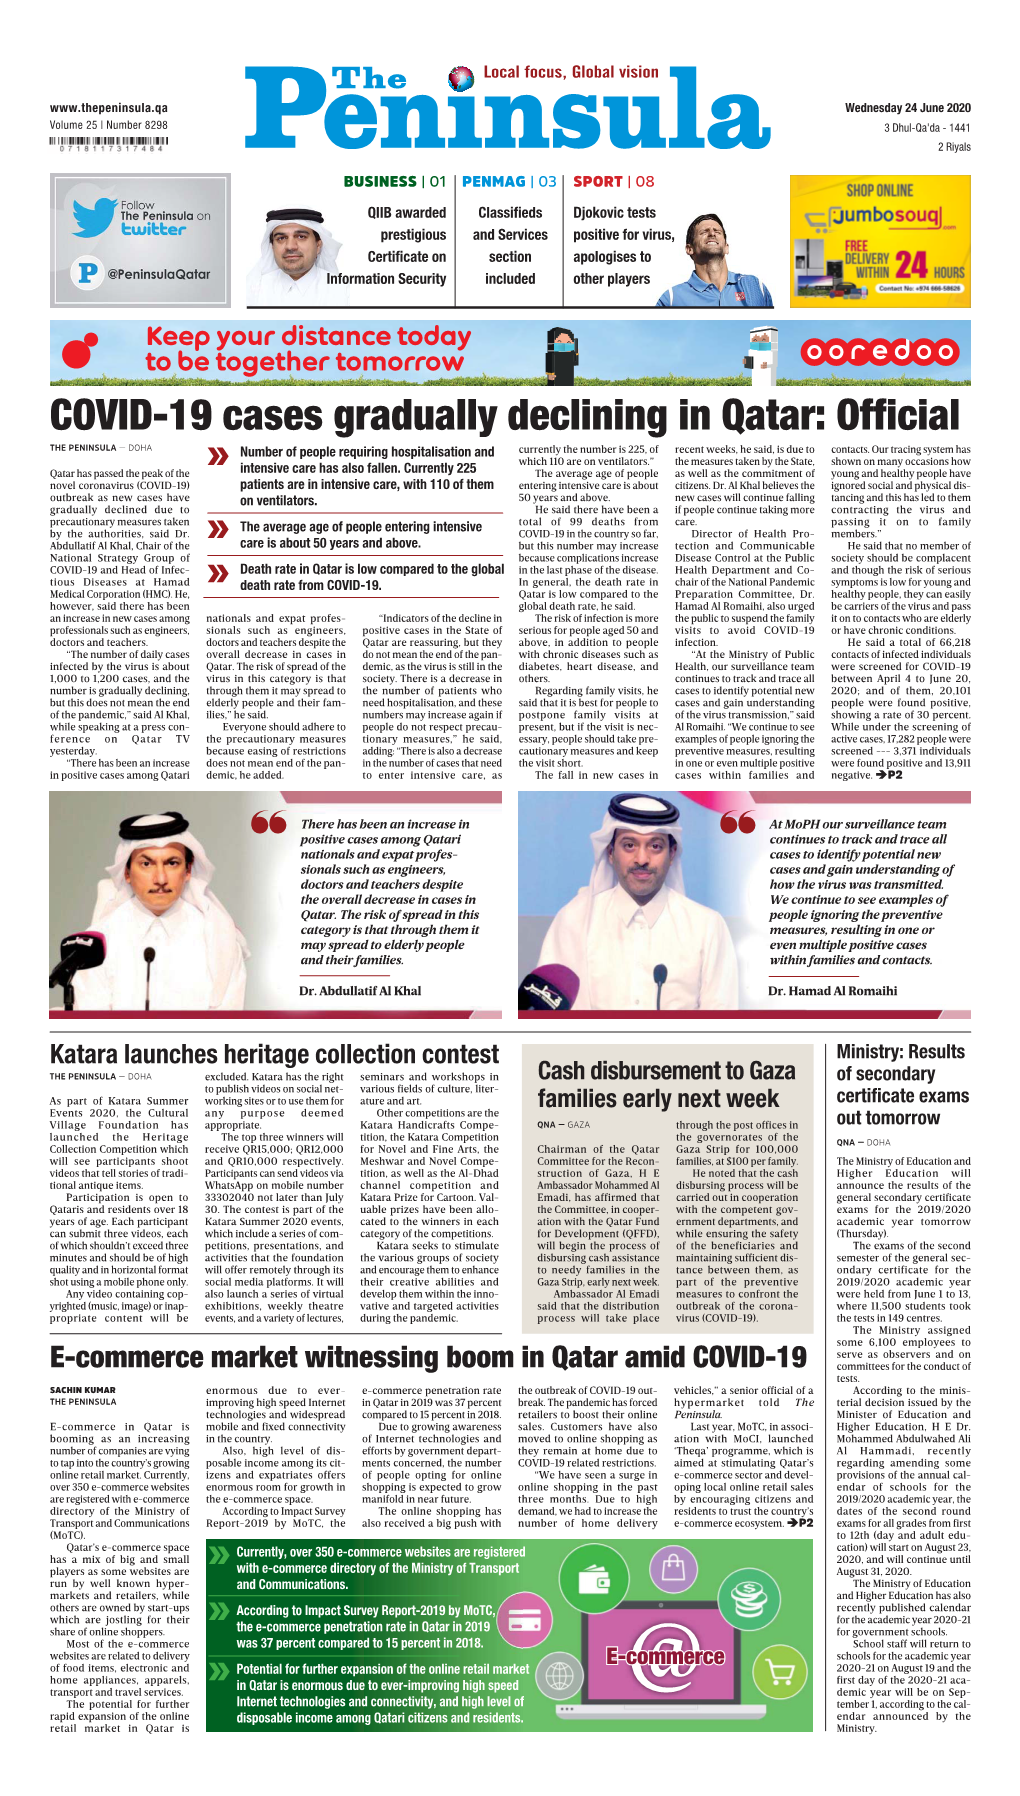 COVID-19 Cases Gradually Declining in Qatar: Official